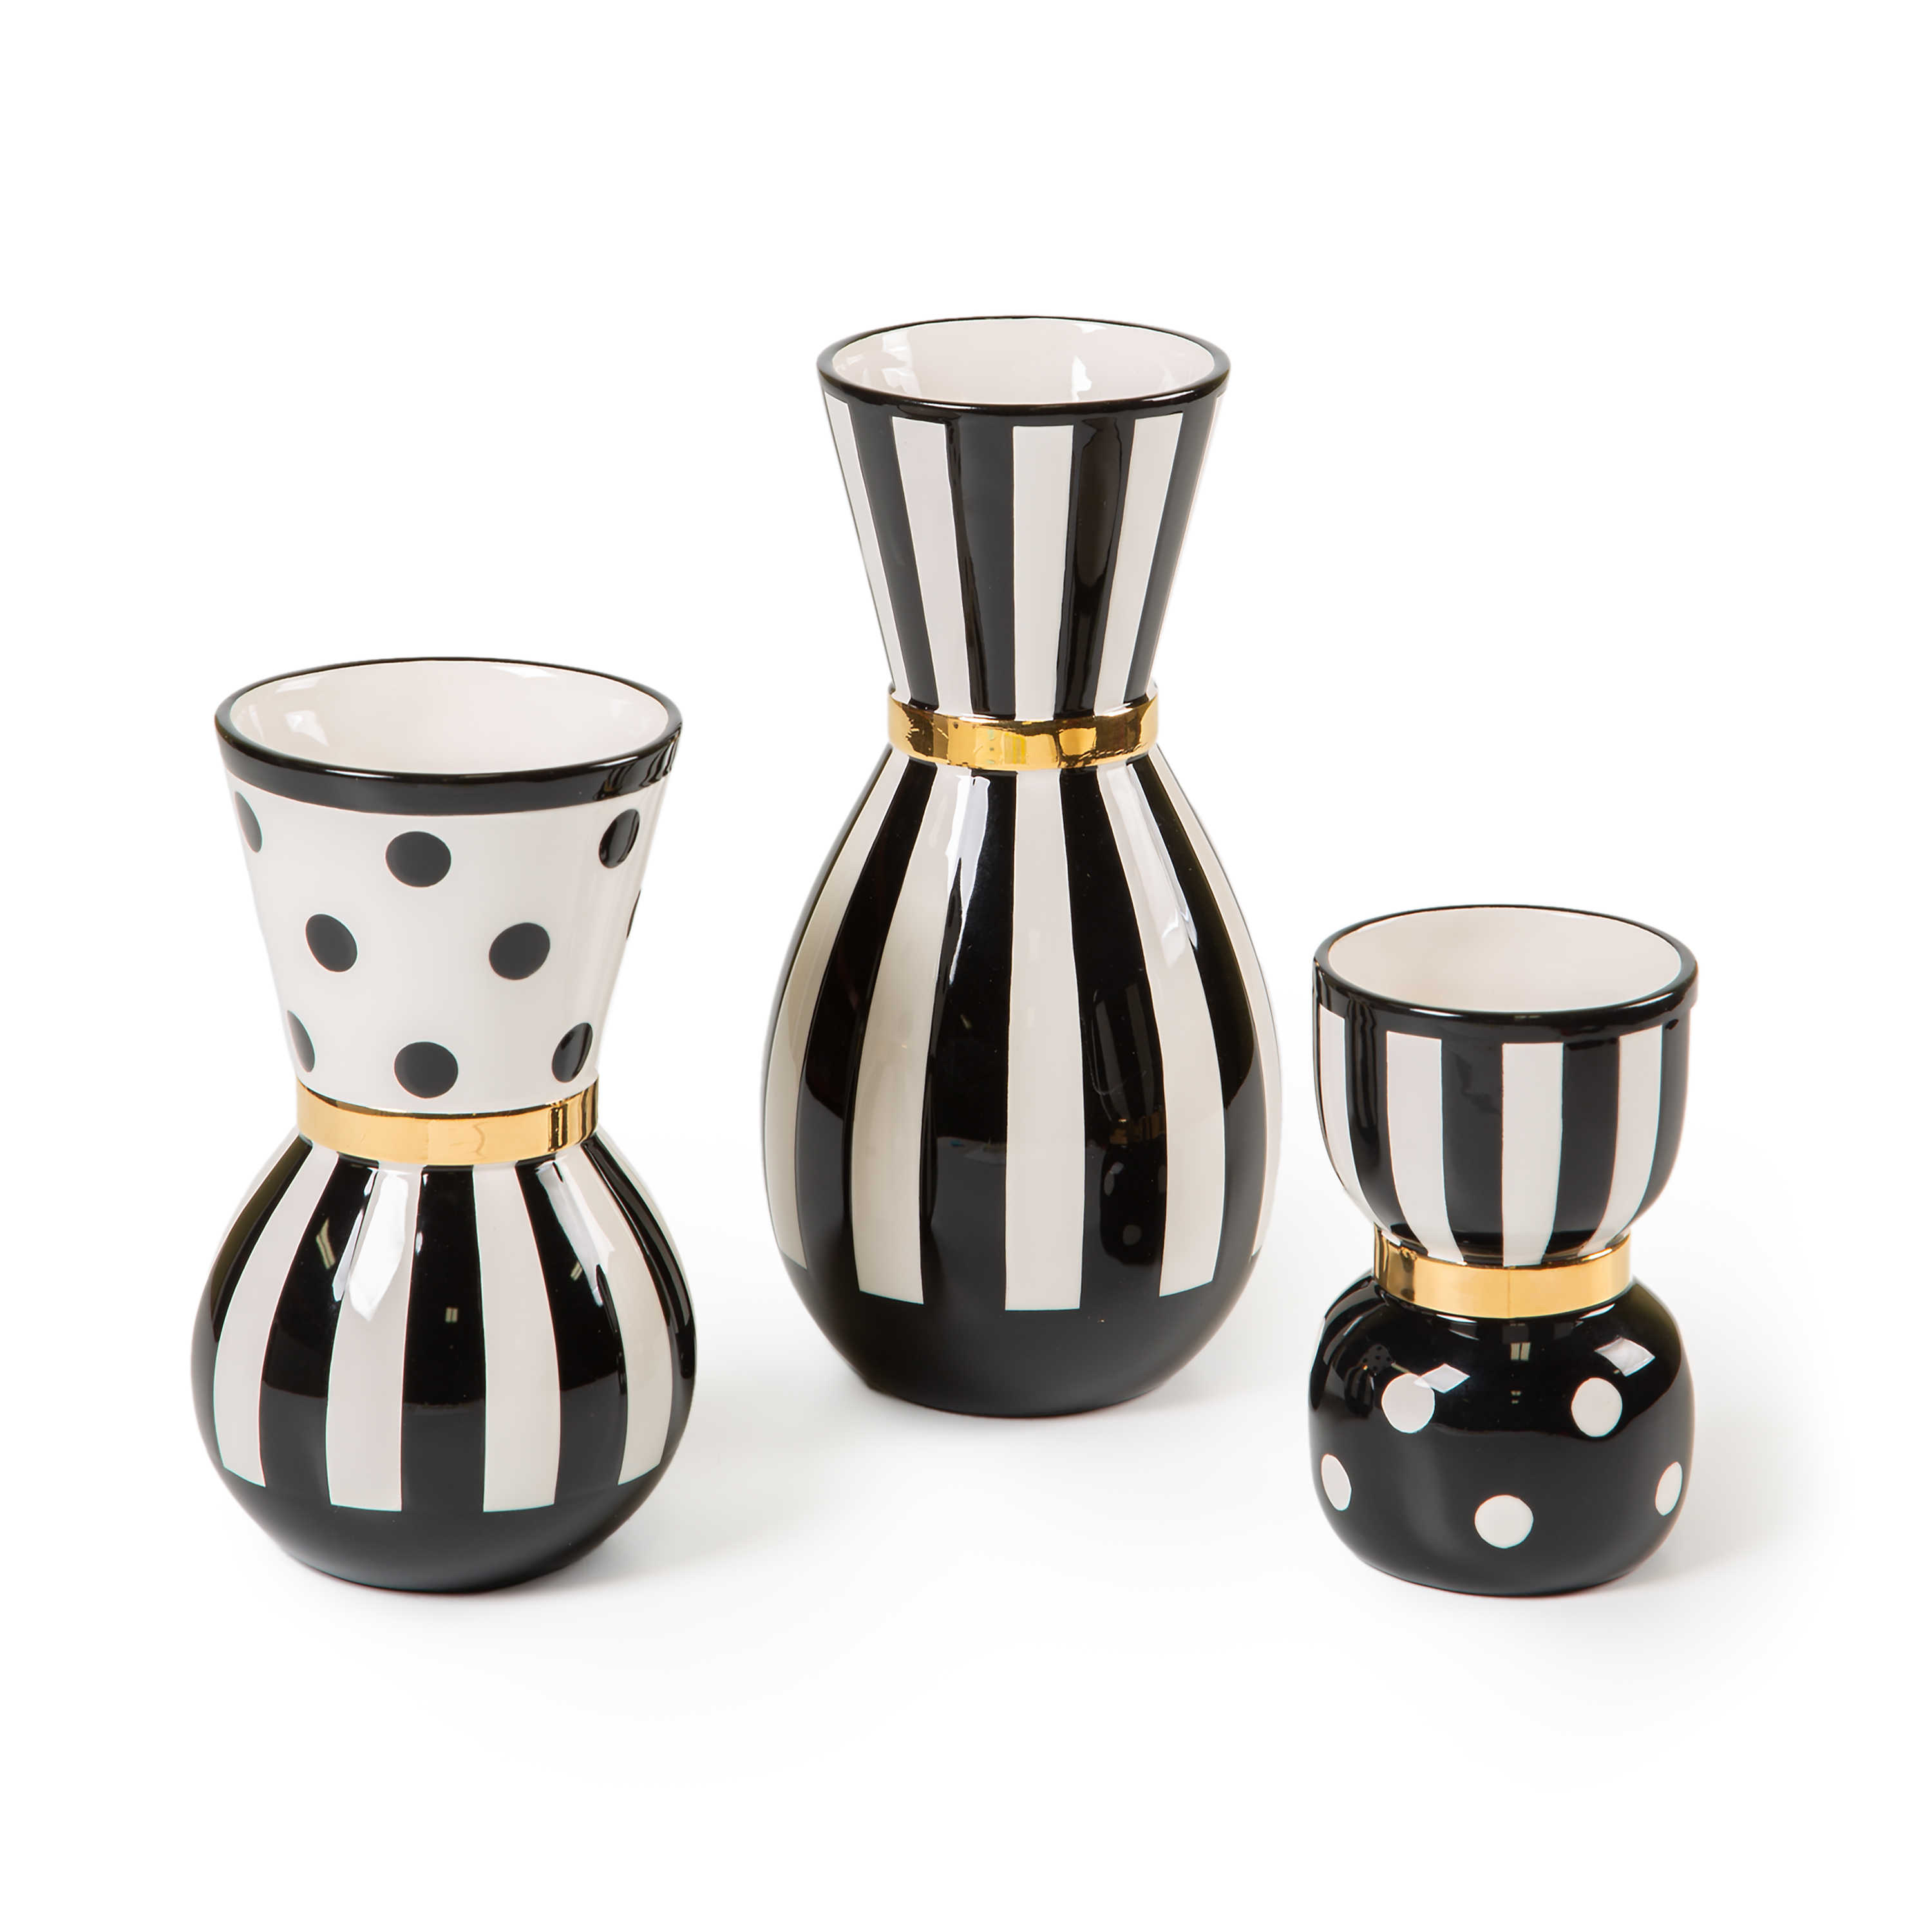 Marquee Vases, Set of 3 mackenzie-childs Panama 0